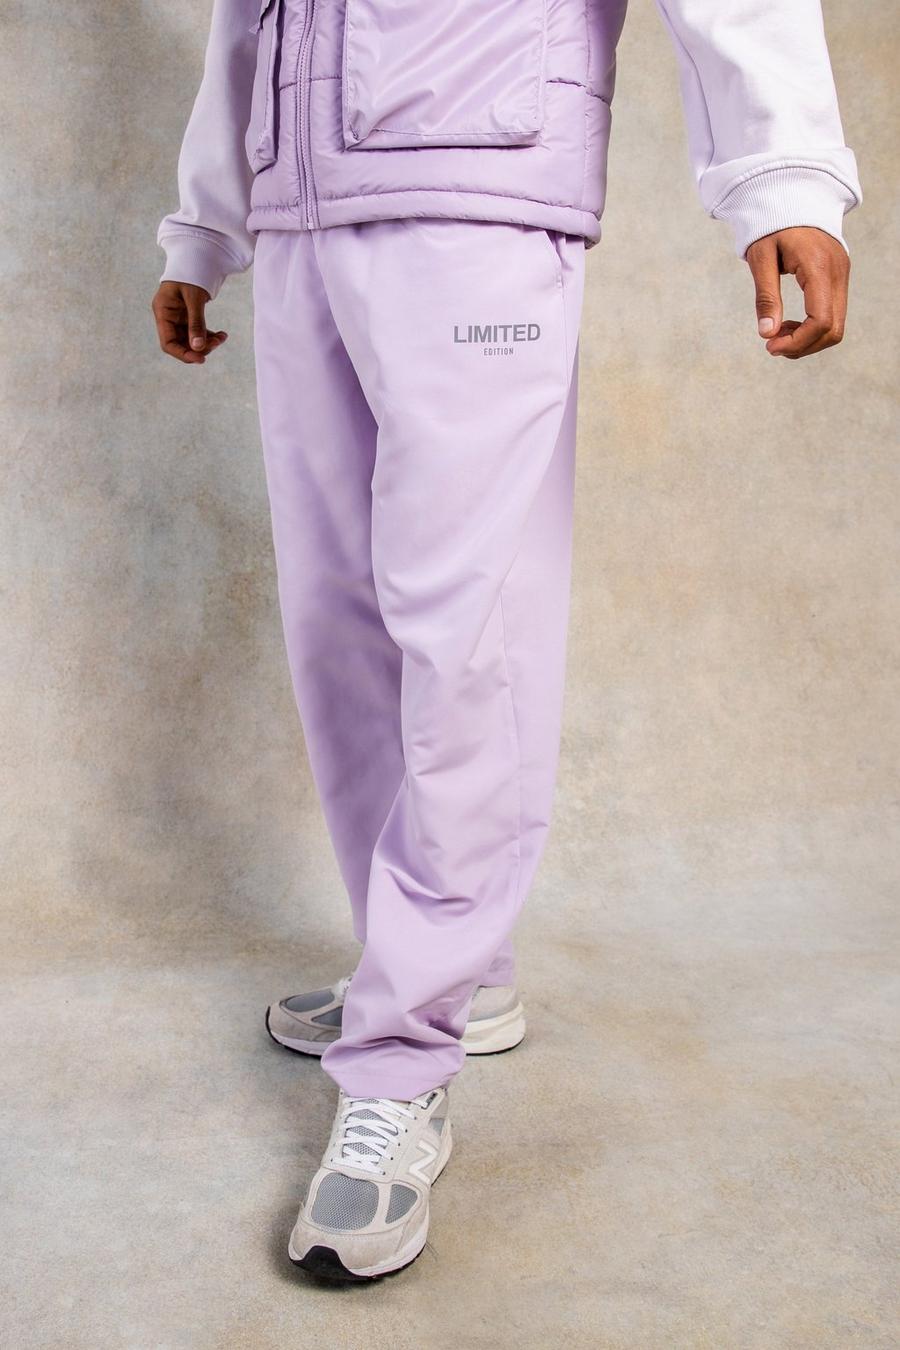 Lilac viola מכנסיים בגזרה ישרה מבד עמיד בצבע אפרסק עם כיתוב Limited